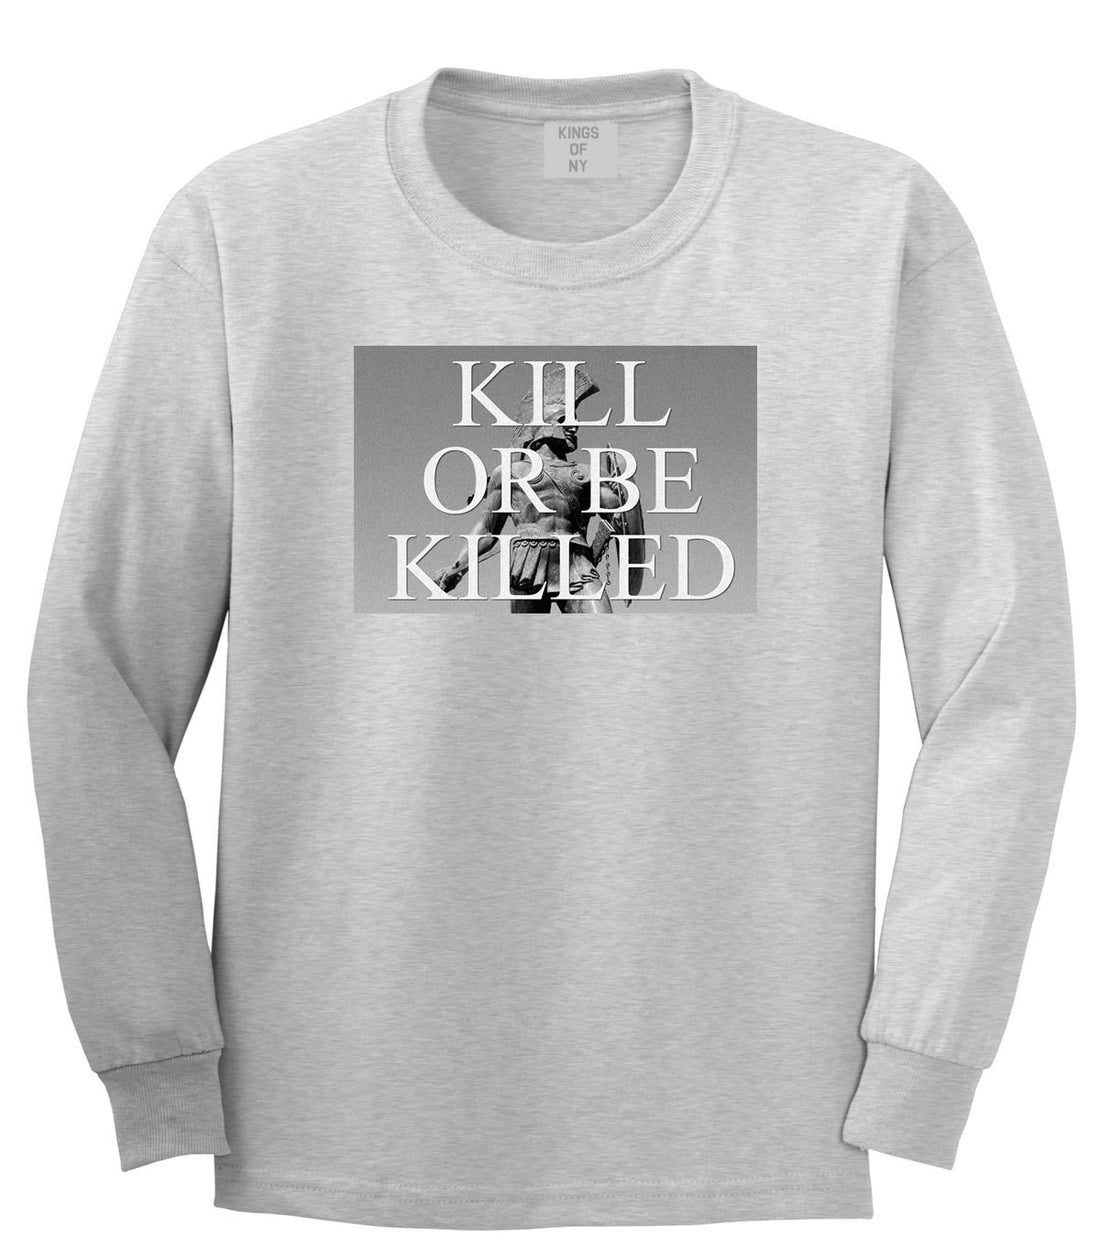 Kill Or Be Killed Long Sleeve T-Shirt in Grey by Kings Of NY